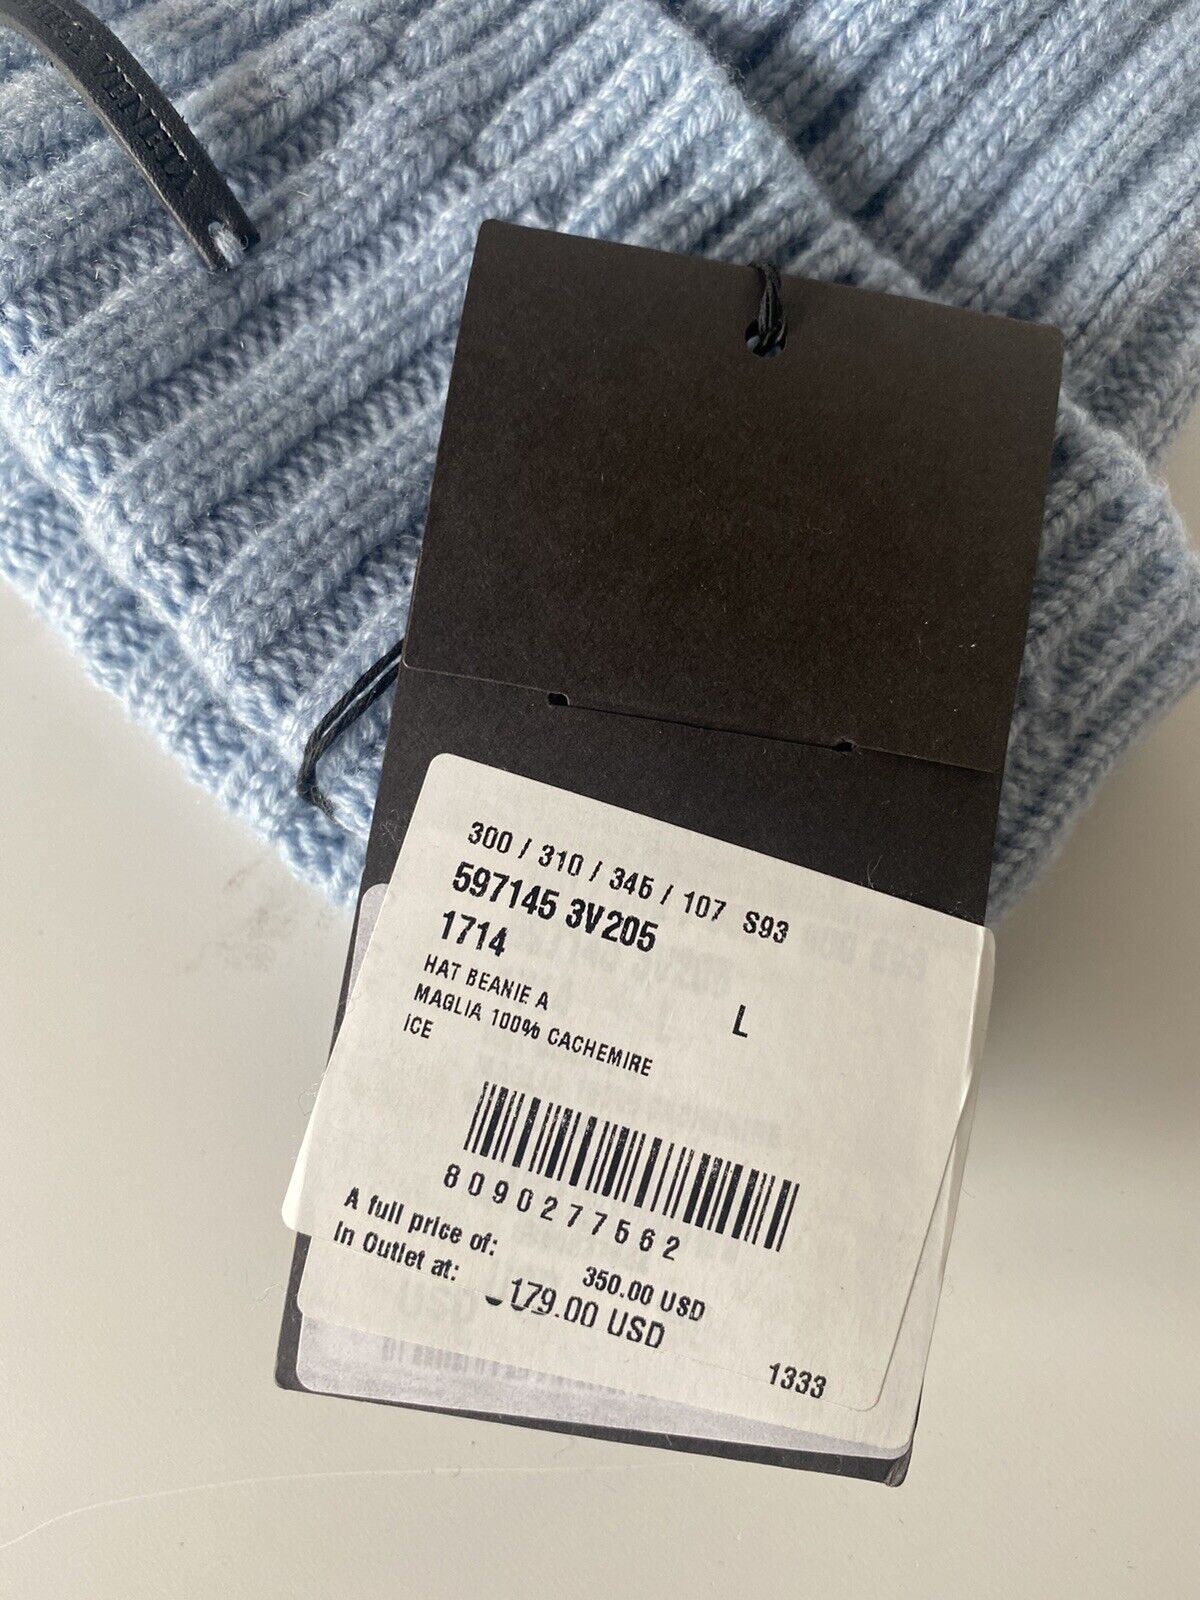 Neu mit Etikett: 350 $ Bottega Veneta Strickmütze aus 100 % Kaschmir, Blau, Größe L, 597145, Italien 